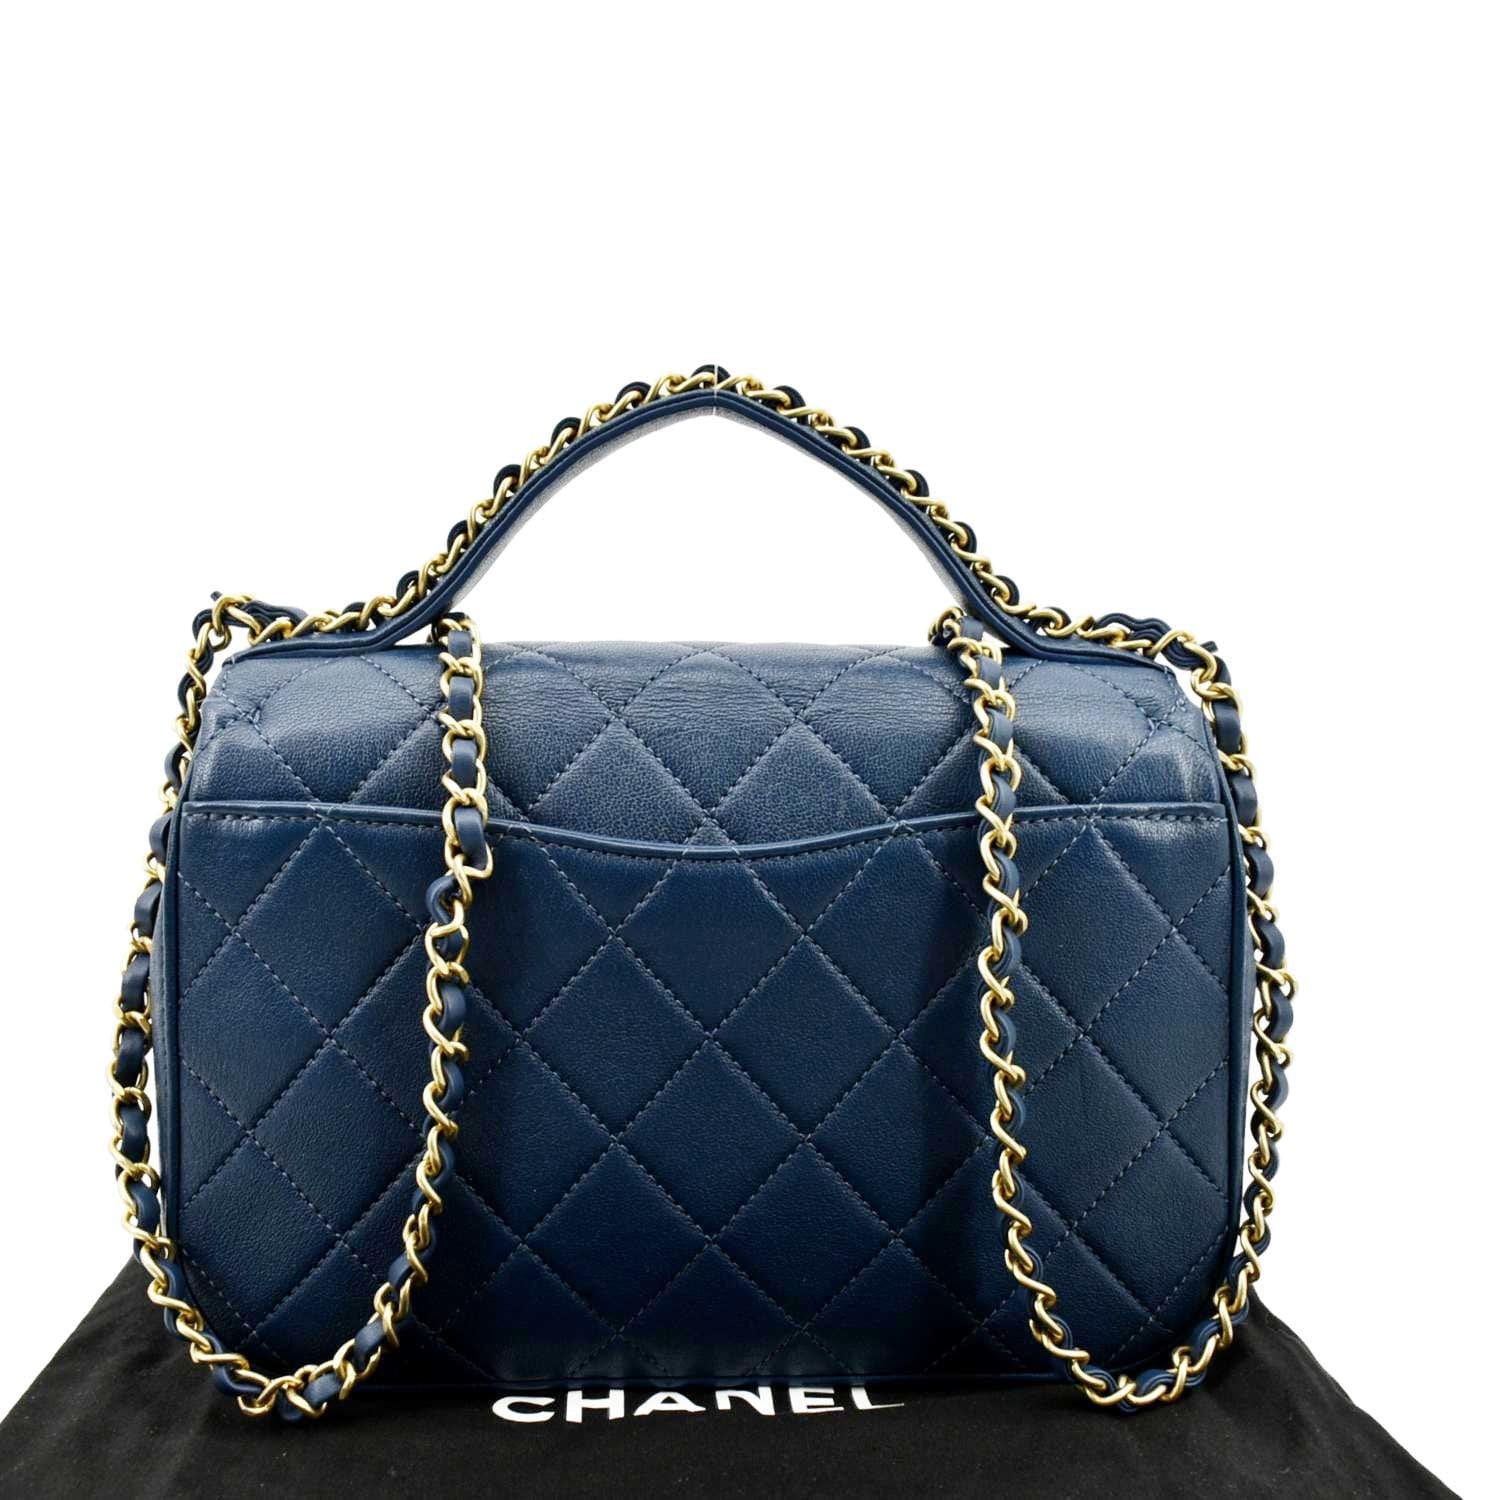 zhongningyifeng Shoulder Bag for Women Handbag Purse Leather